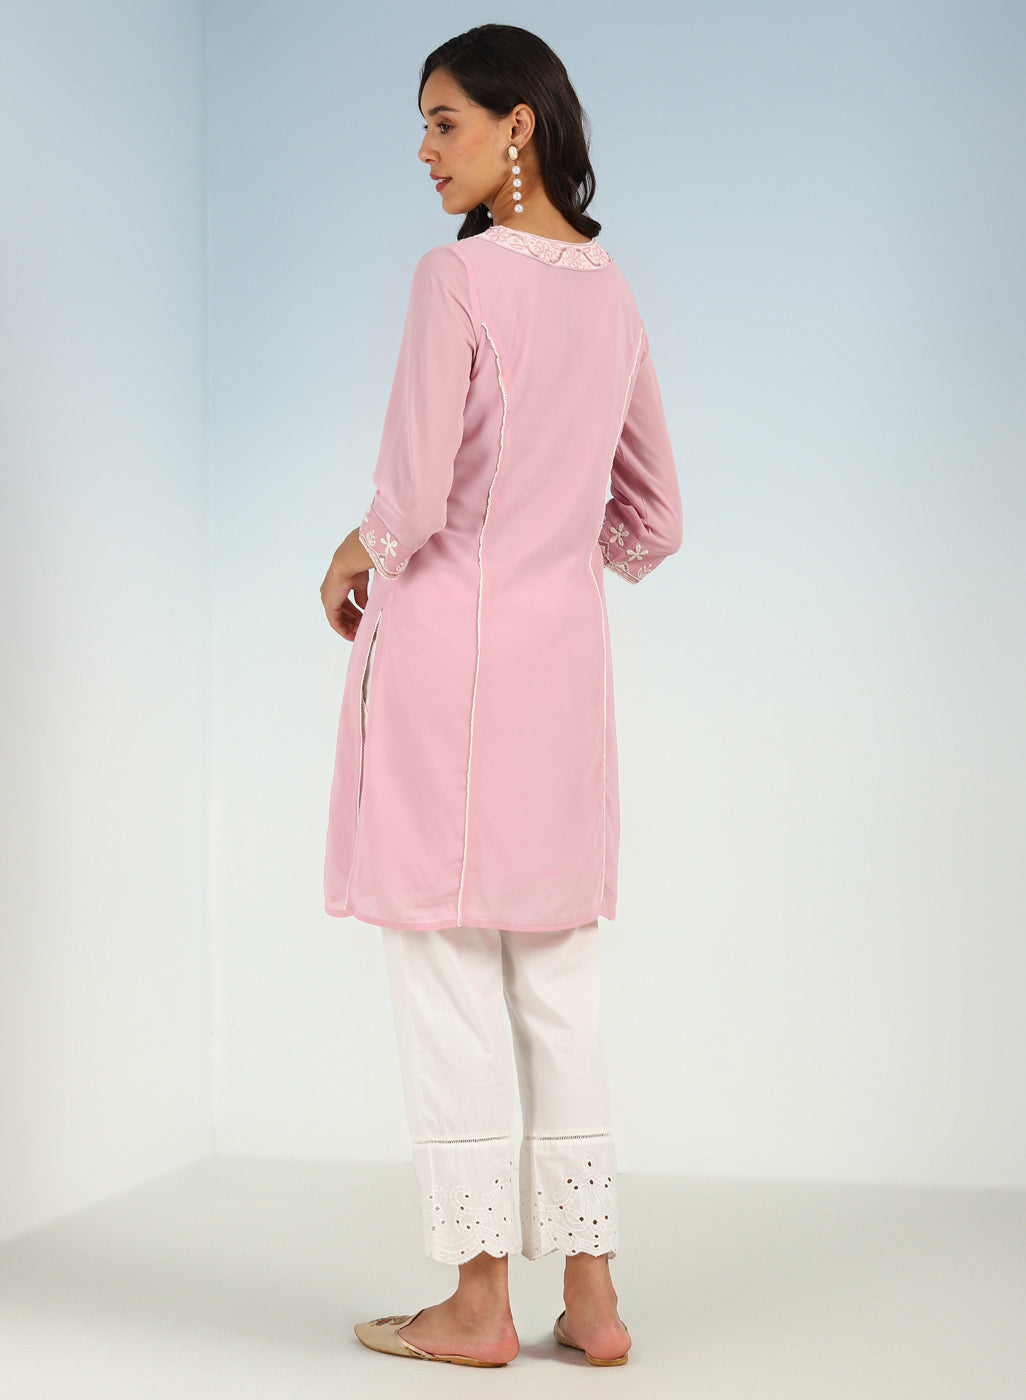 Solid Pink Round Neck kurti with Sequins Work